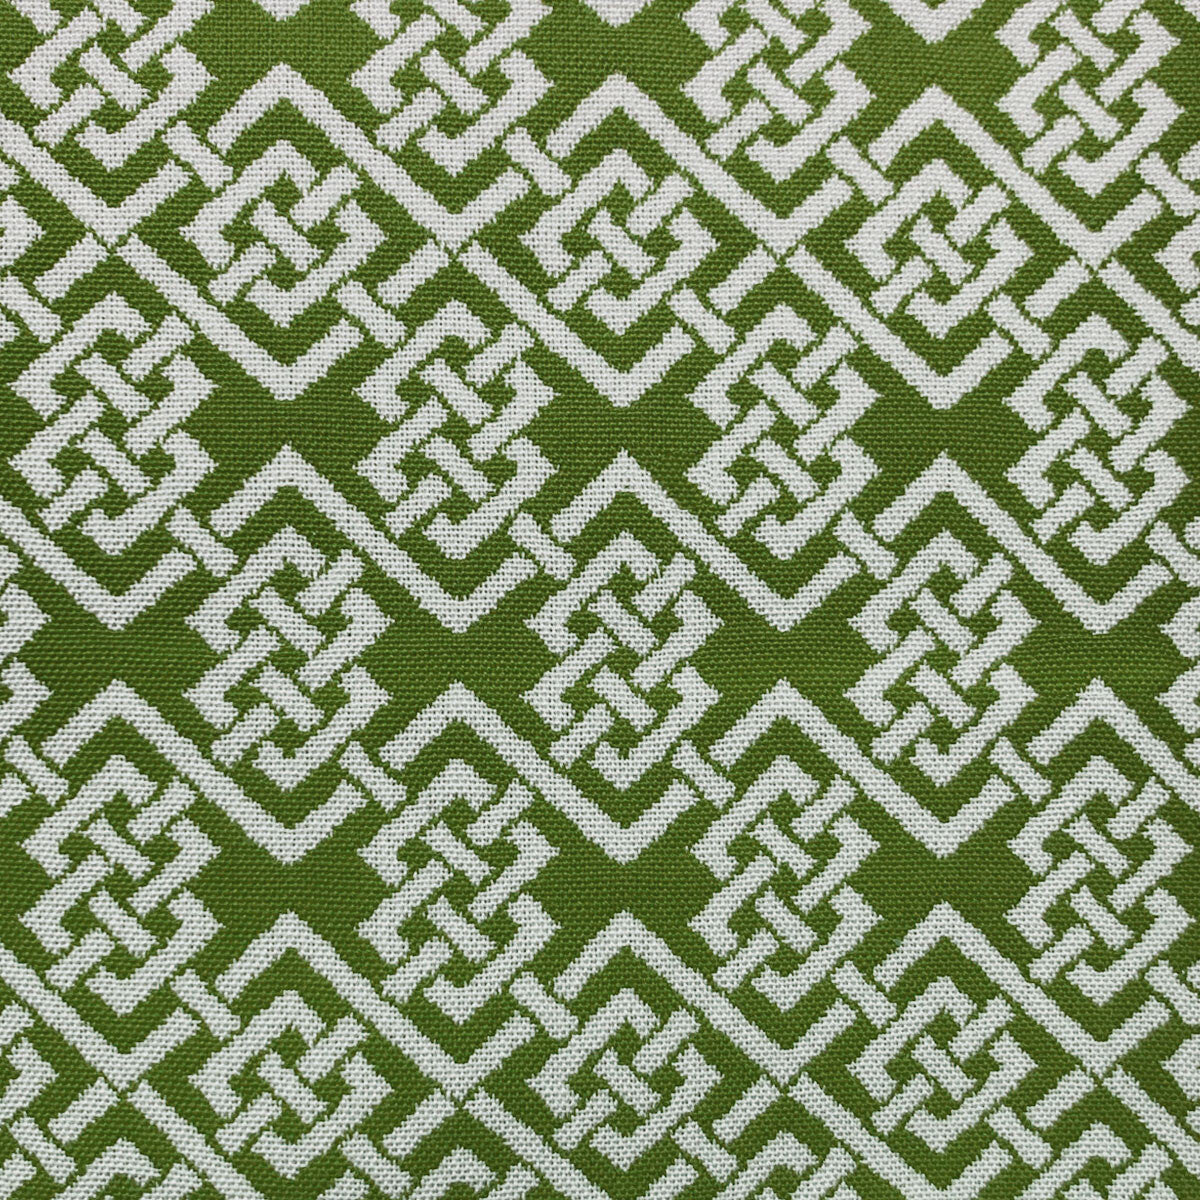 Ephraim fabric in verde color - pattern LCT1055.007.0 - by Gaston y Daniela in the Lorenzo Castillo VI collection